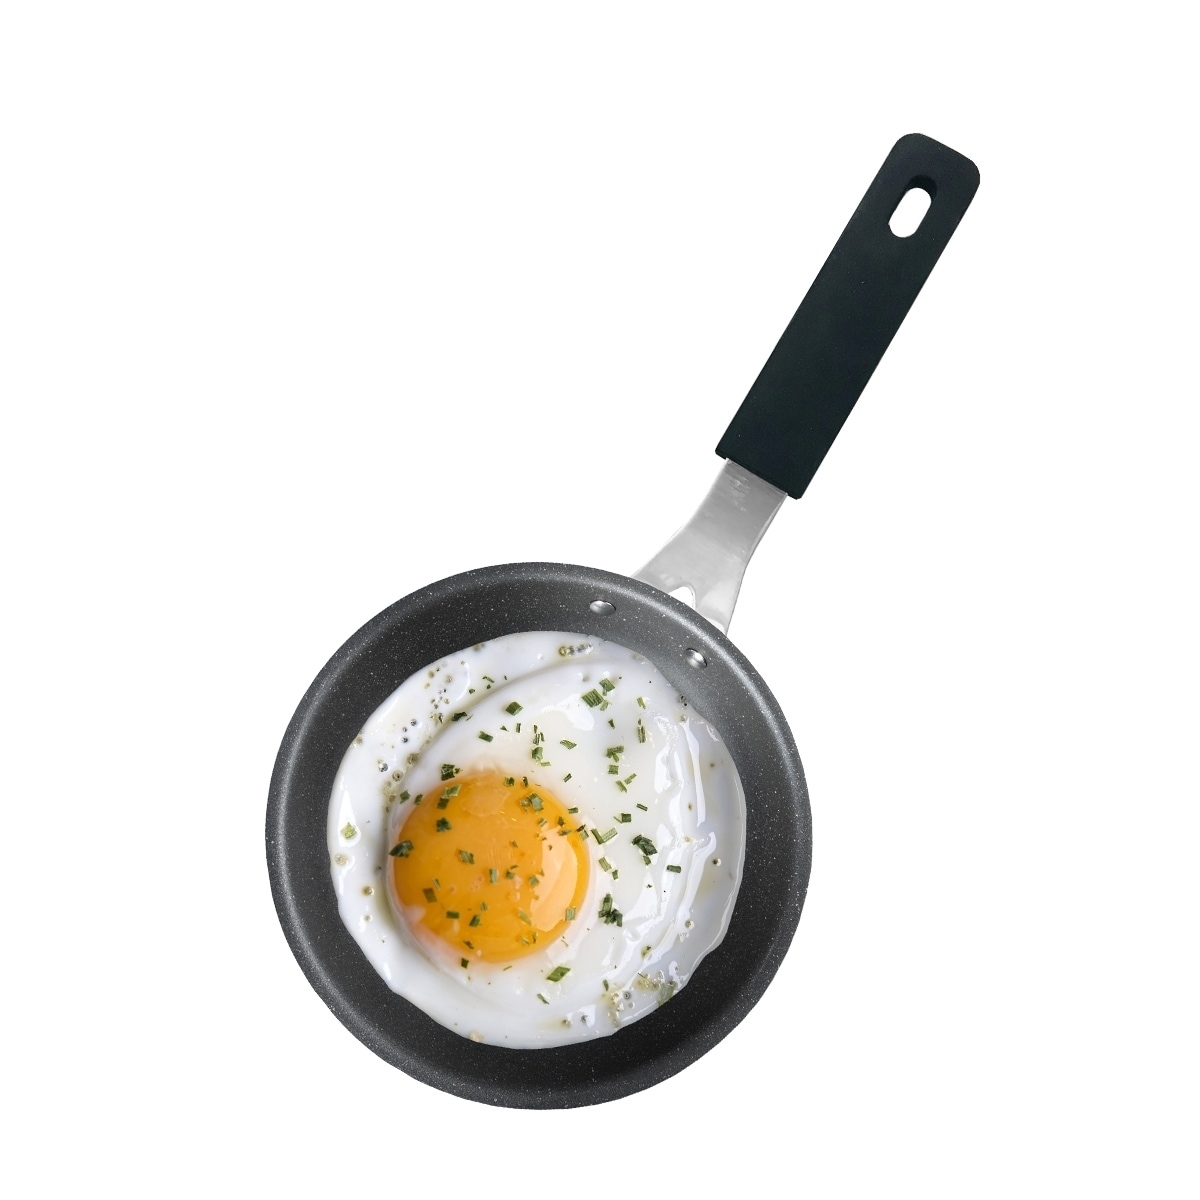 Granitestone Non-stick Mineral Infused 5.5 Single Egg Nonstick Frying Pan